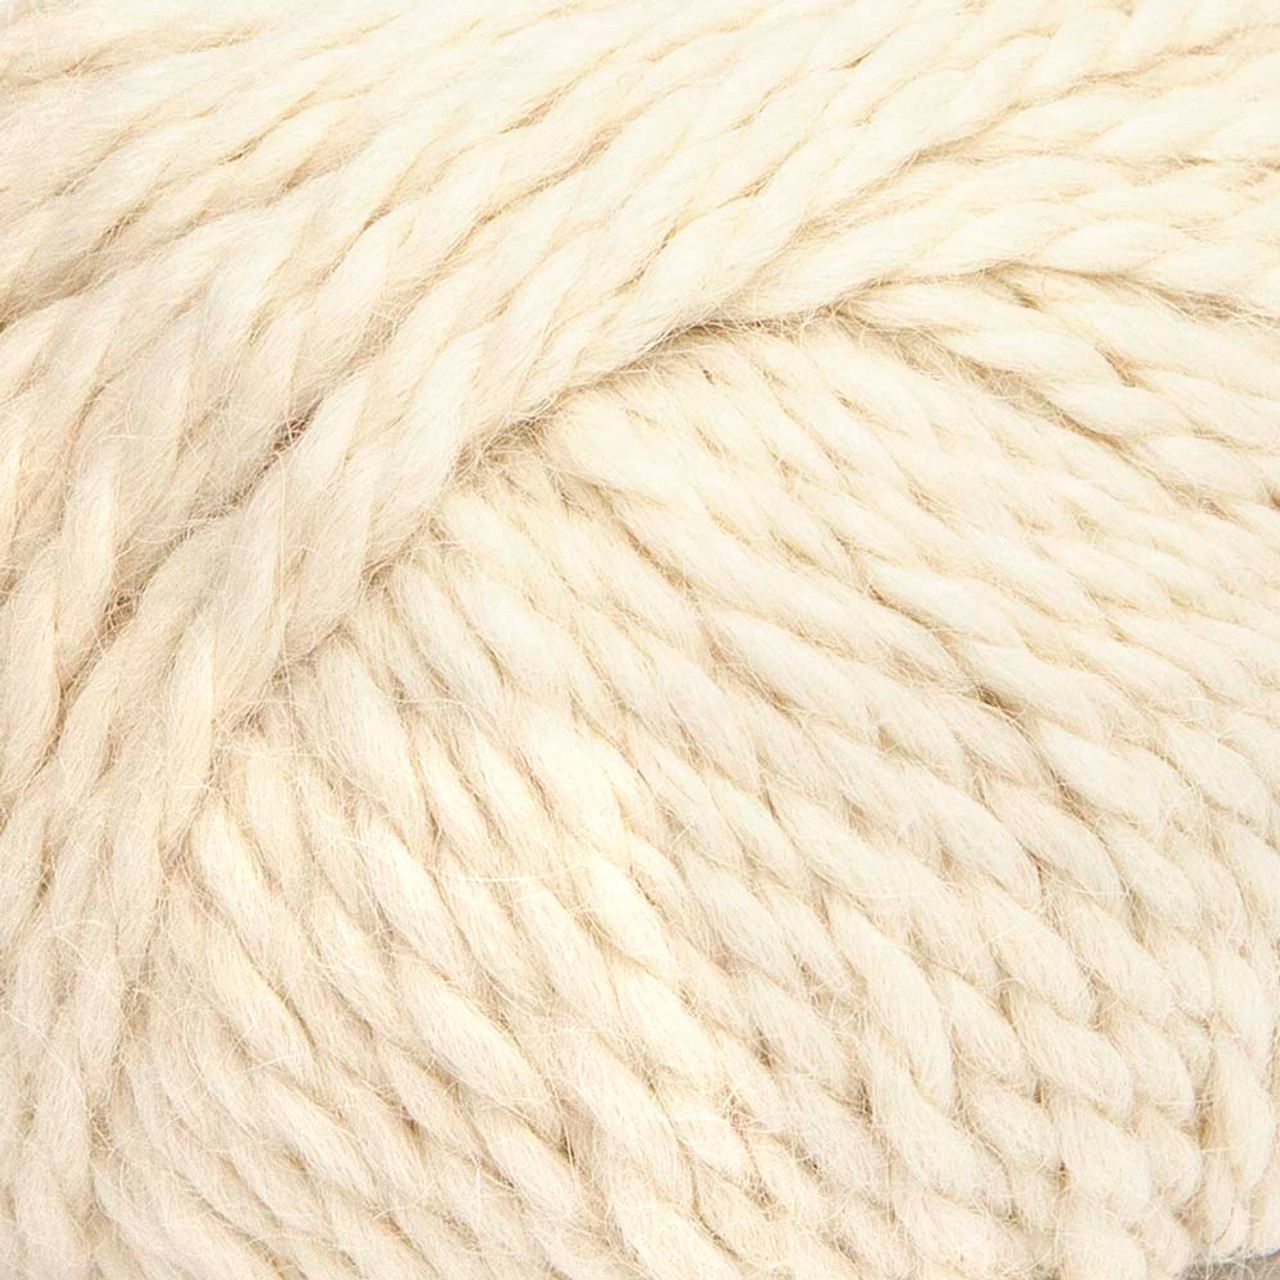 Five Skeins Yarn—Wool Addicts (Faith), Wool, Nylon — Stitch Buffalo